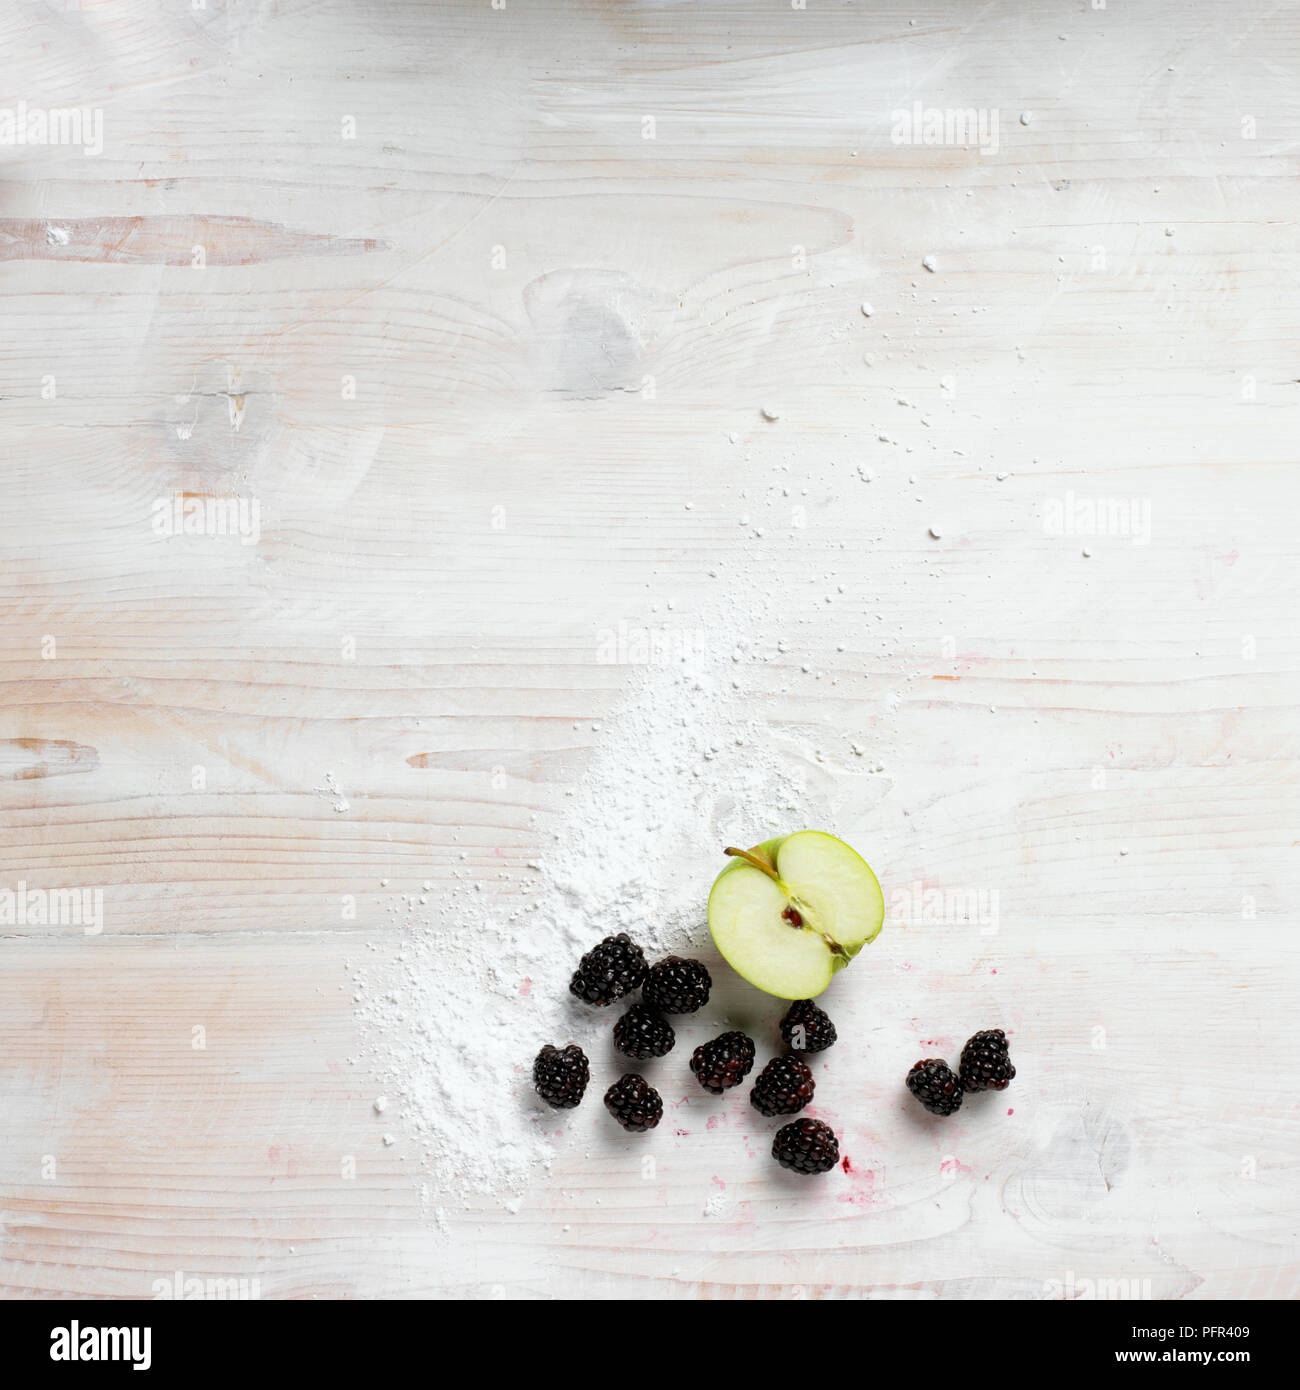 Half apple and blackberries on floured wooden surface Stock Photo